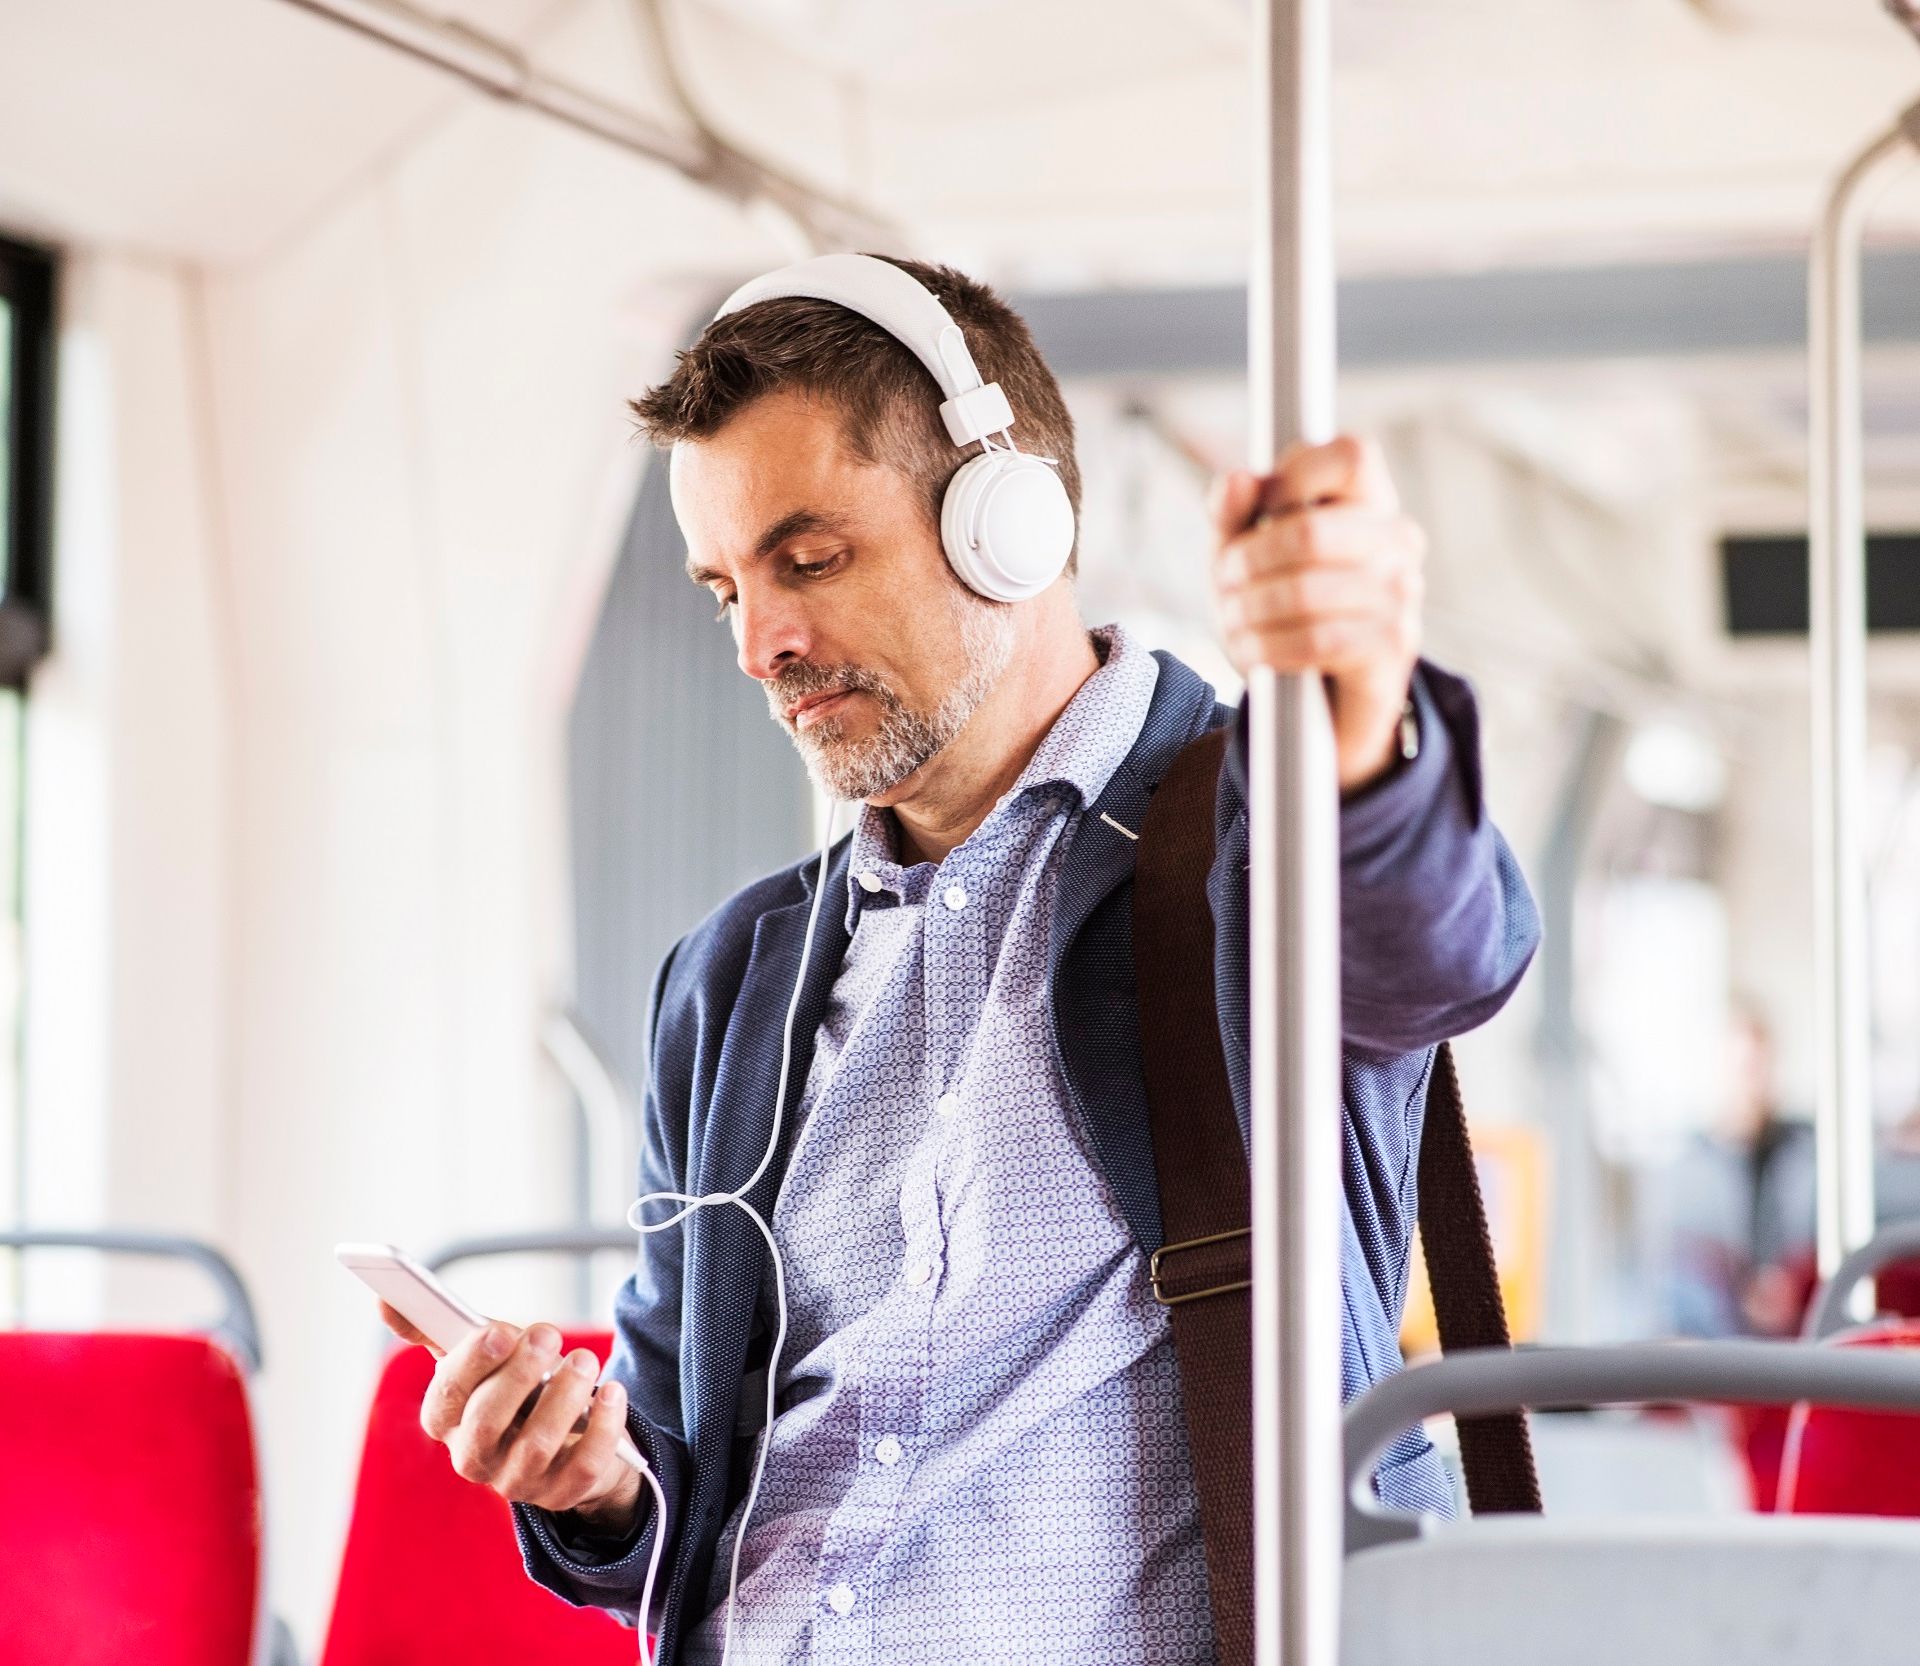 Mann im Bus mit Kopfhörer